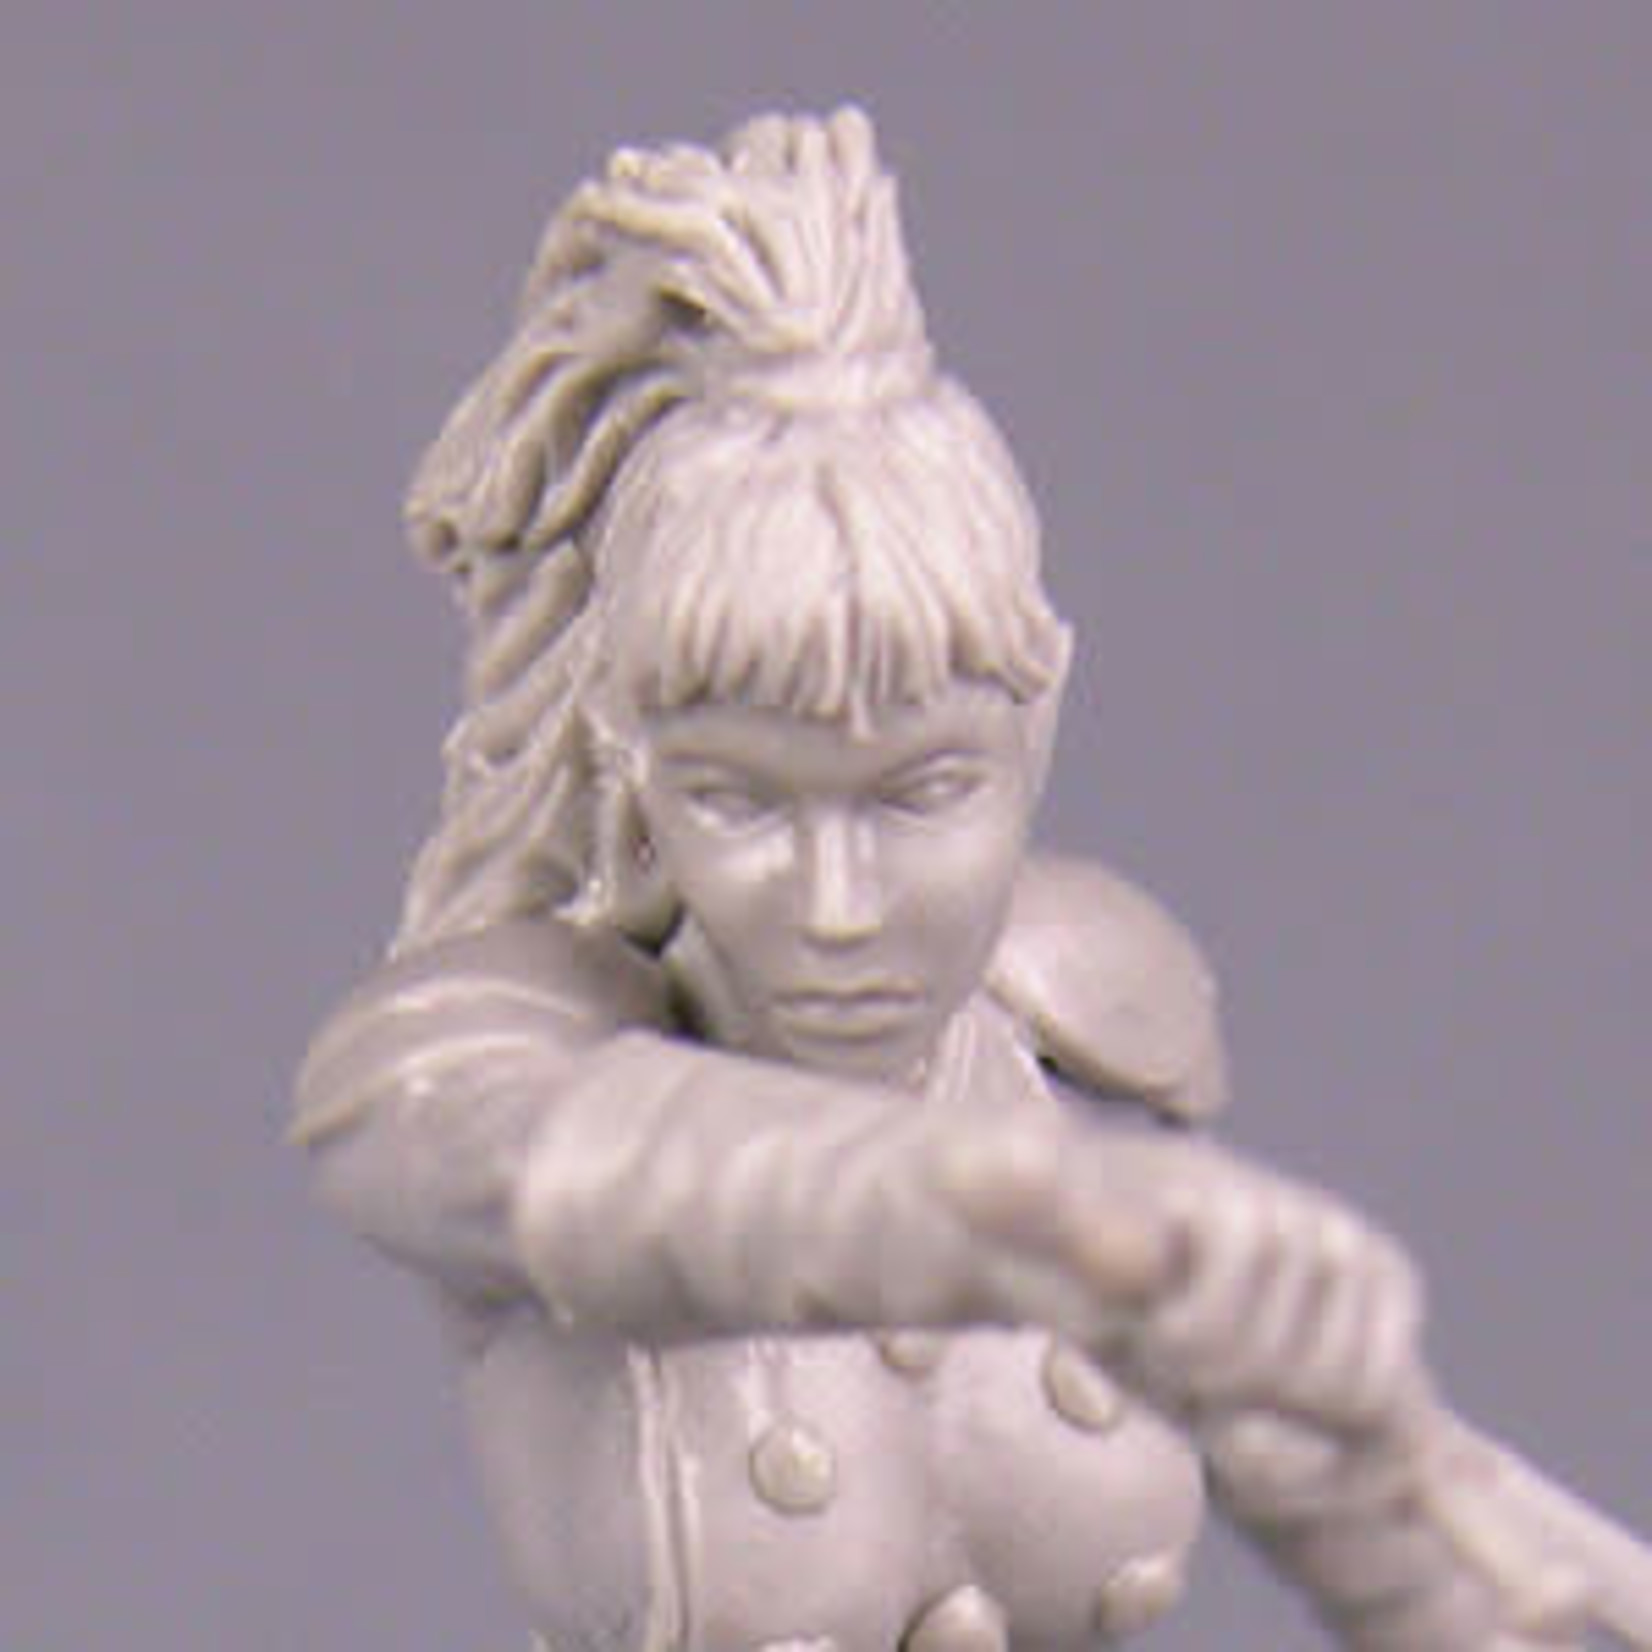 Dark Sword Miniatures Dark Sword Miniatures (Metal) Elmore Masterworks - Female Warrior (1)